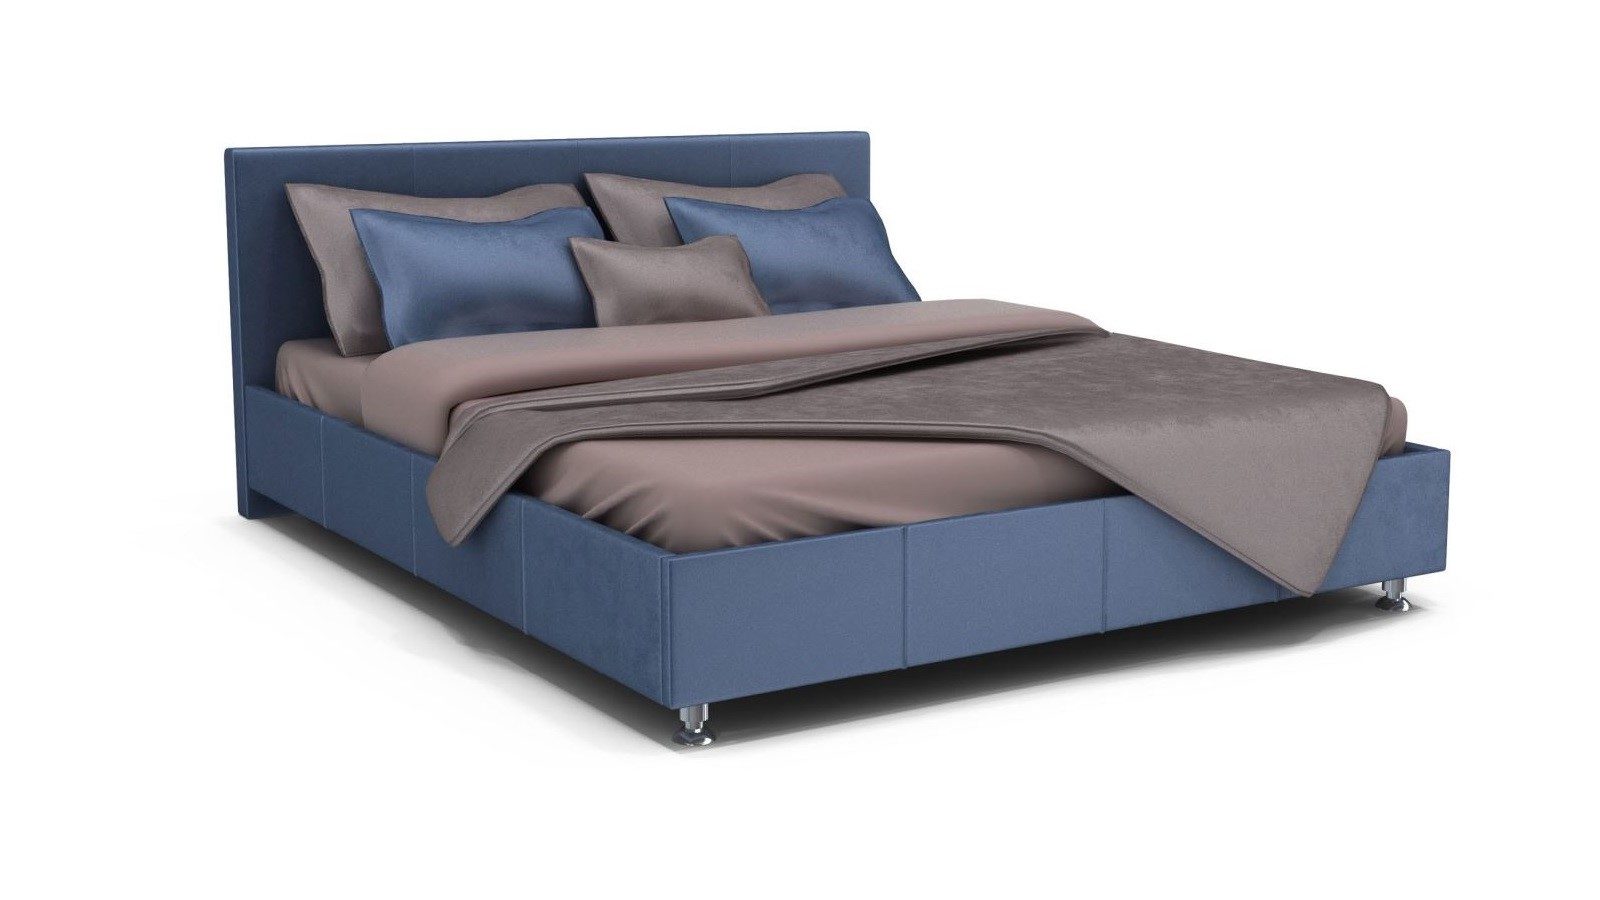 Аскона мебель кровати. Кровать Доменико Аскона. Кровать Domenico Аскона. Кровать Фернандо 160 Аскона.